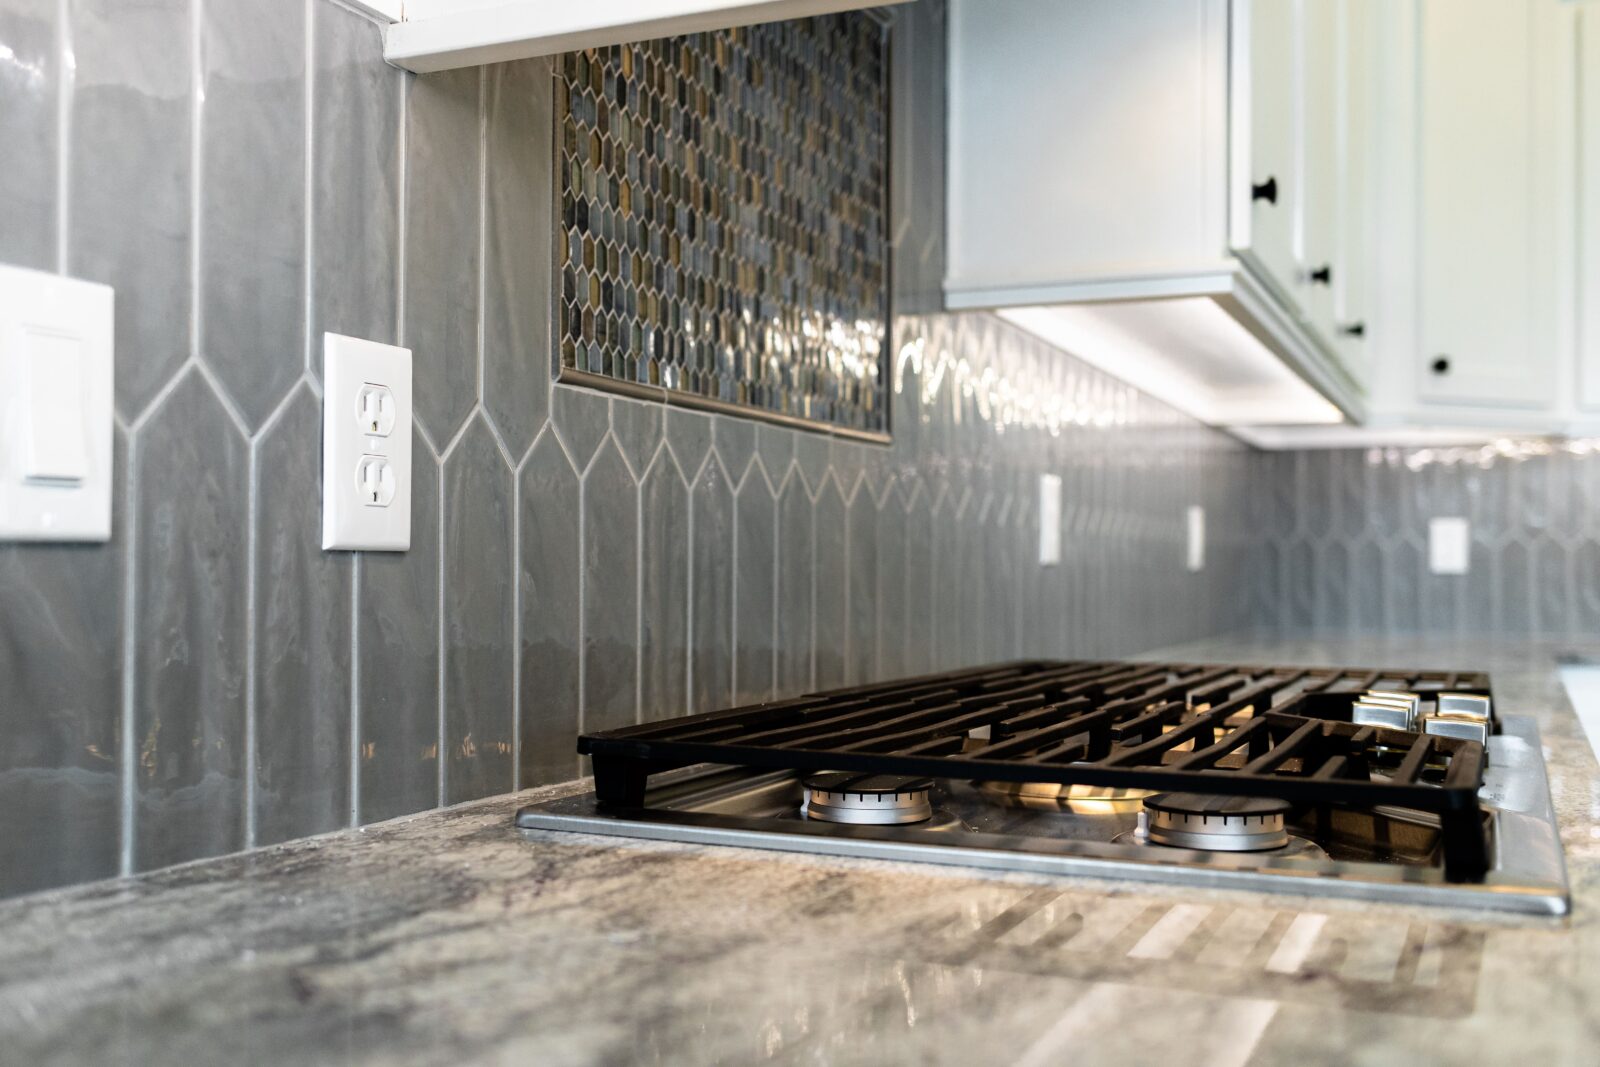 Tile in kitchen | Carpetland USA